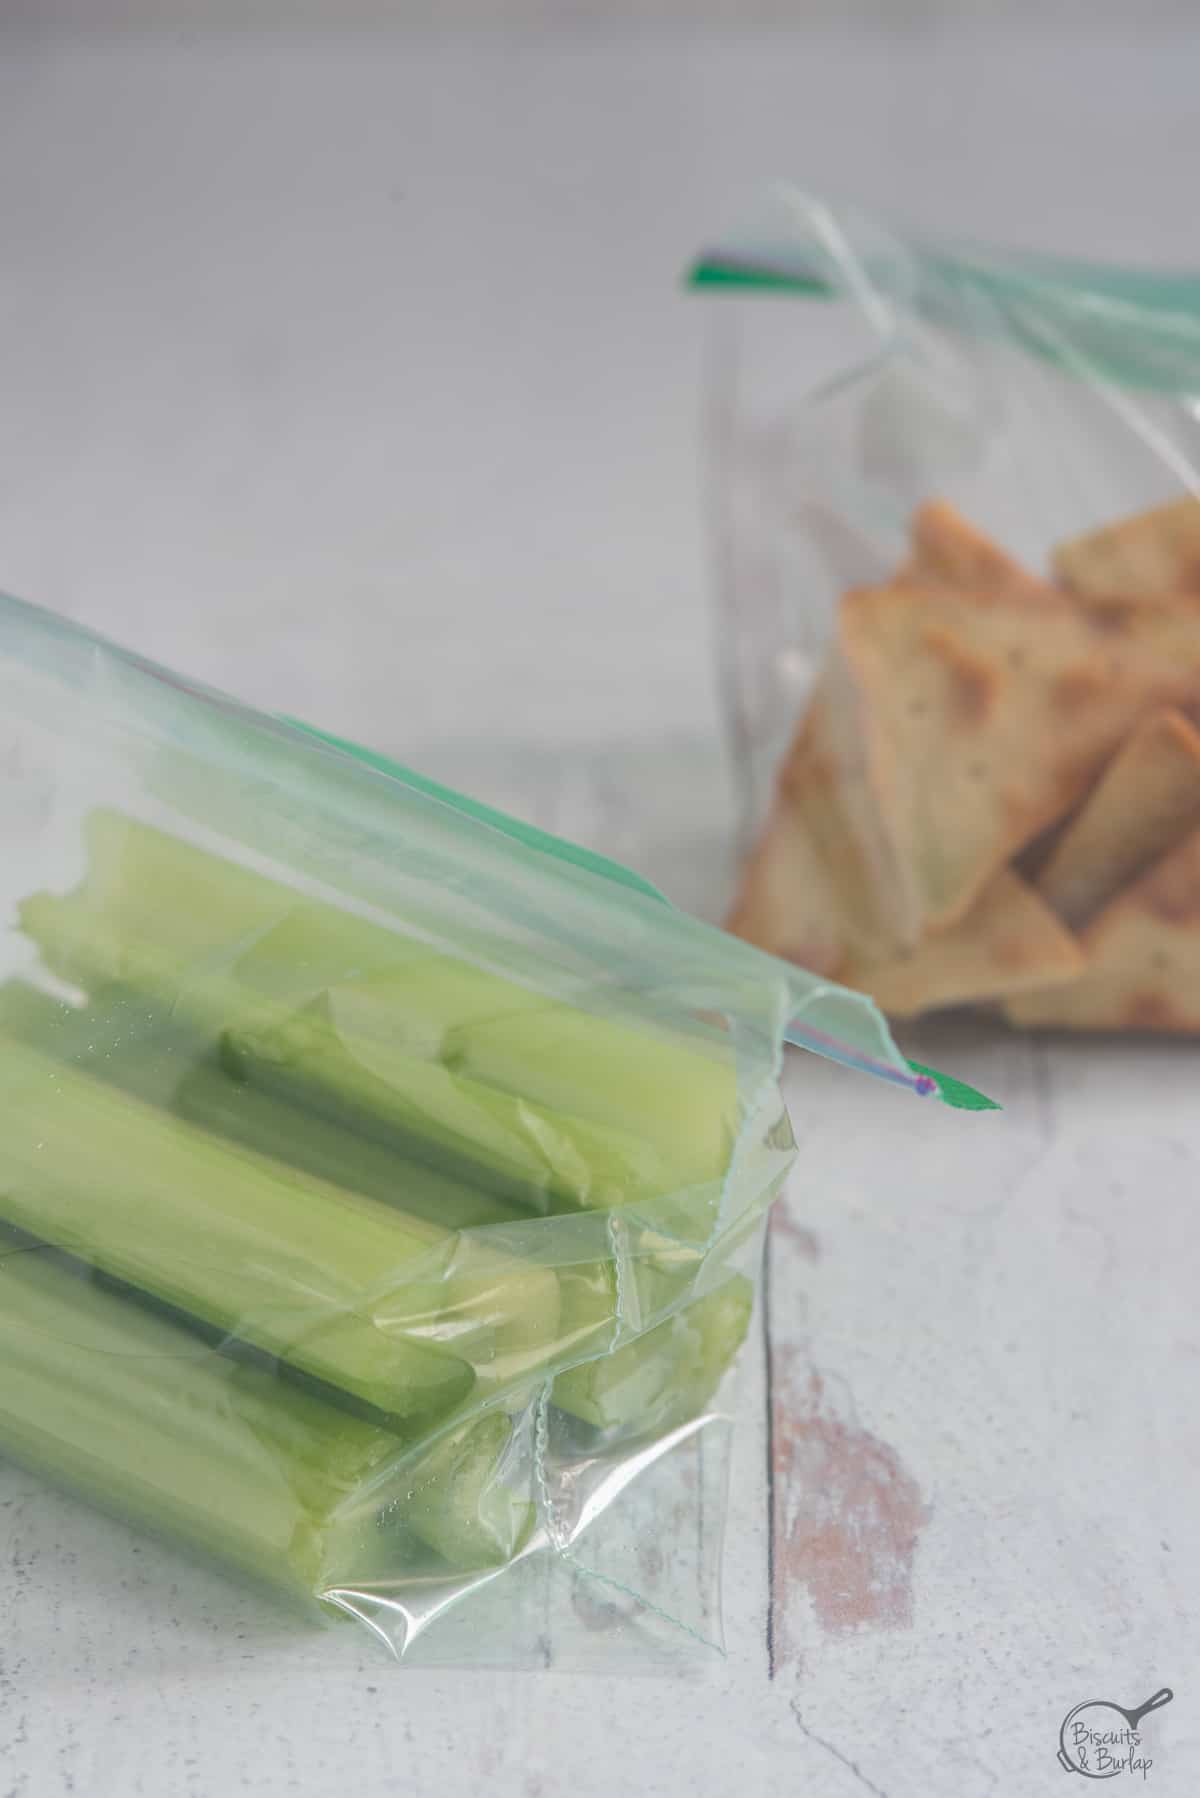 celery and crackers in baggies.